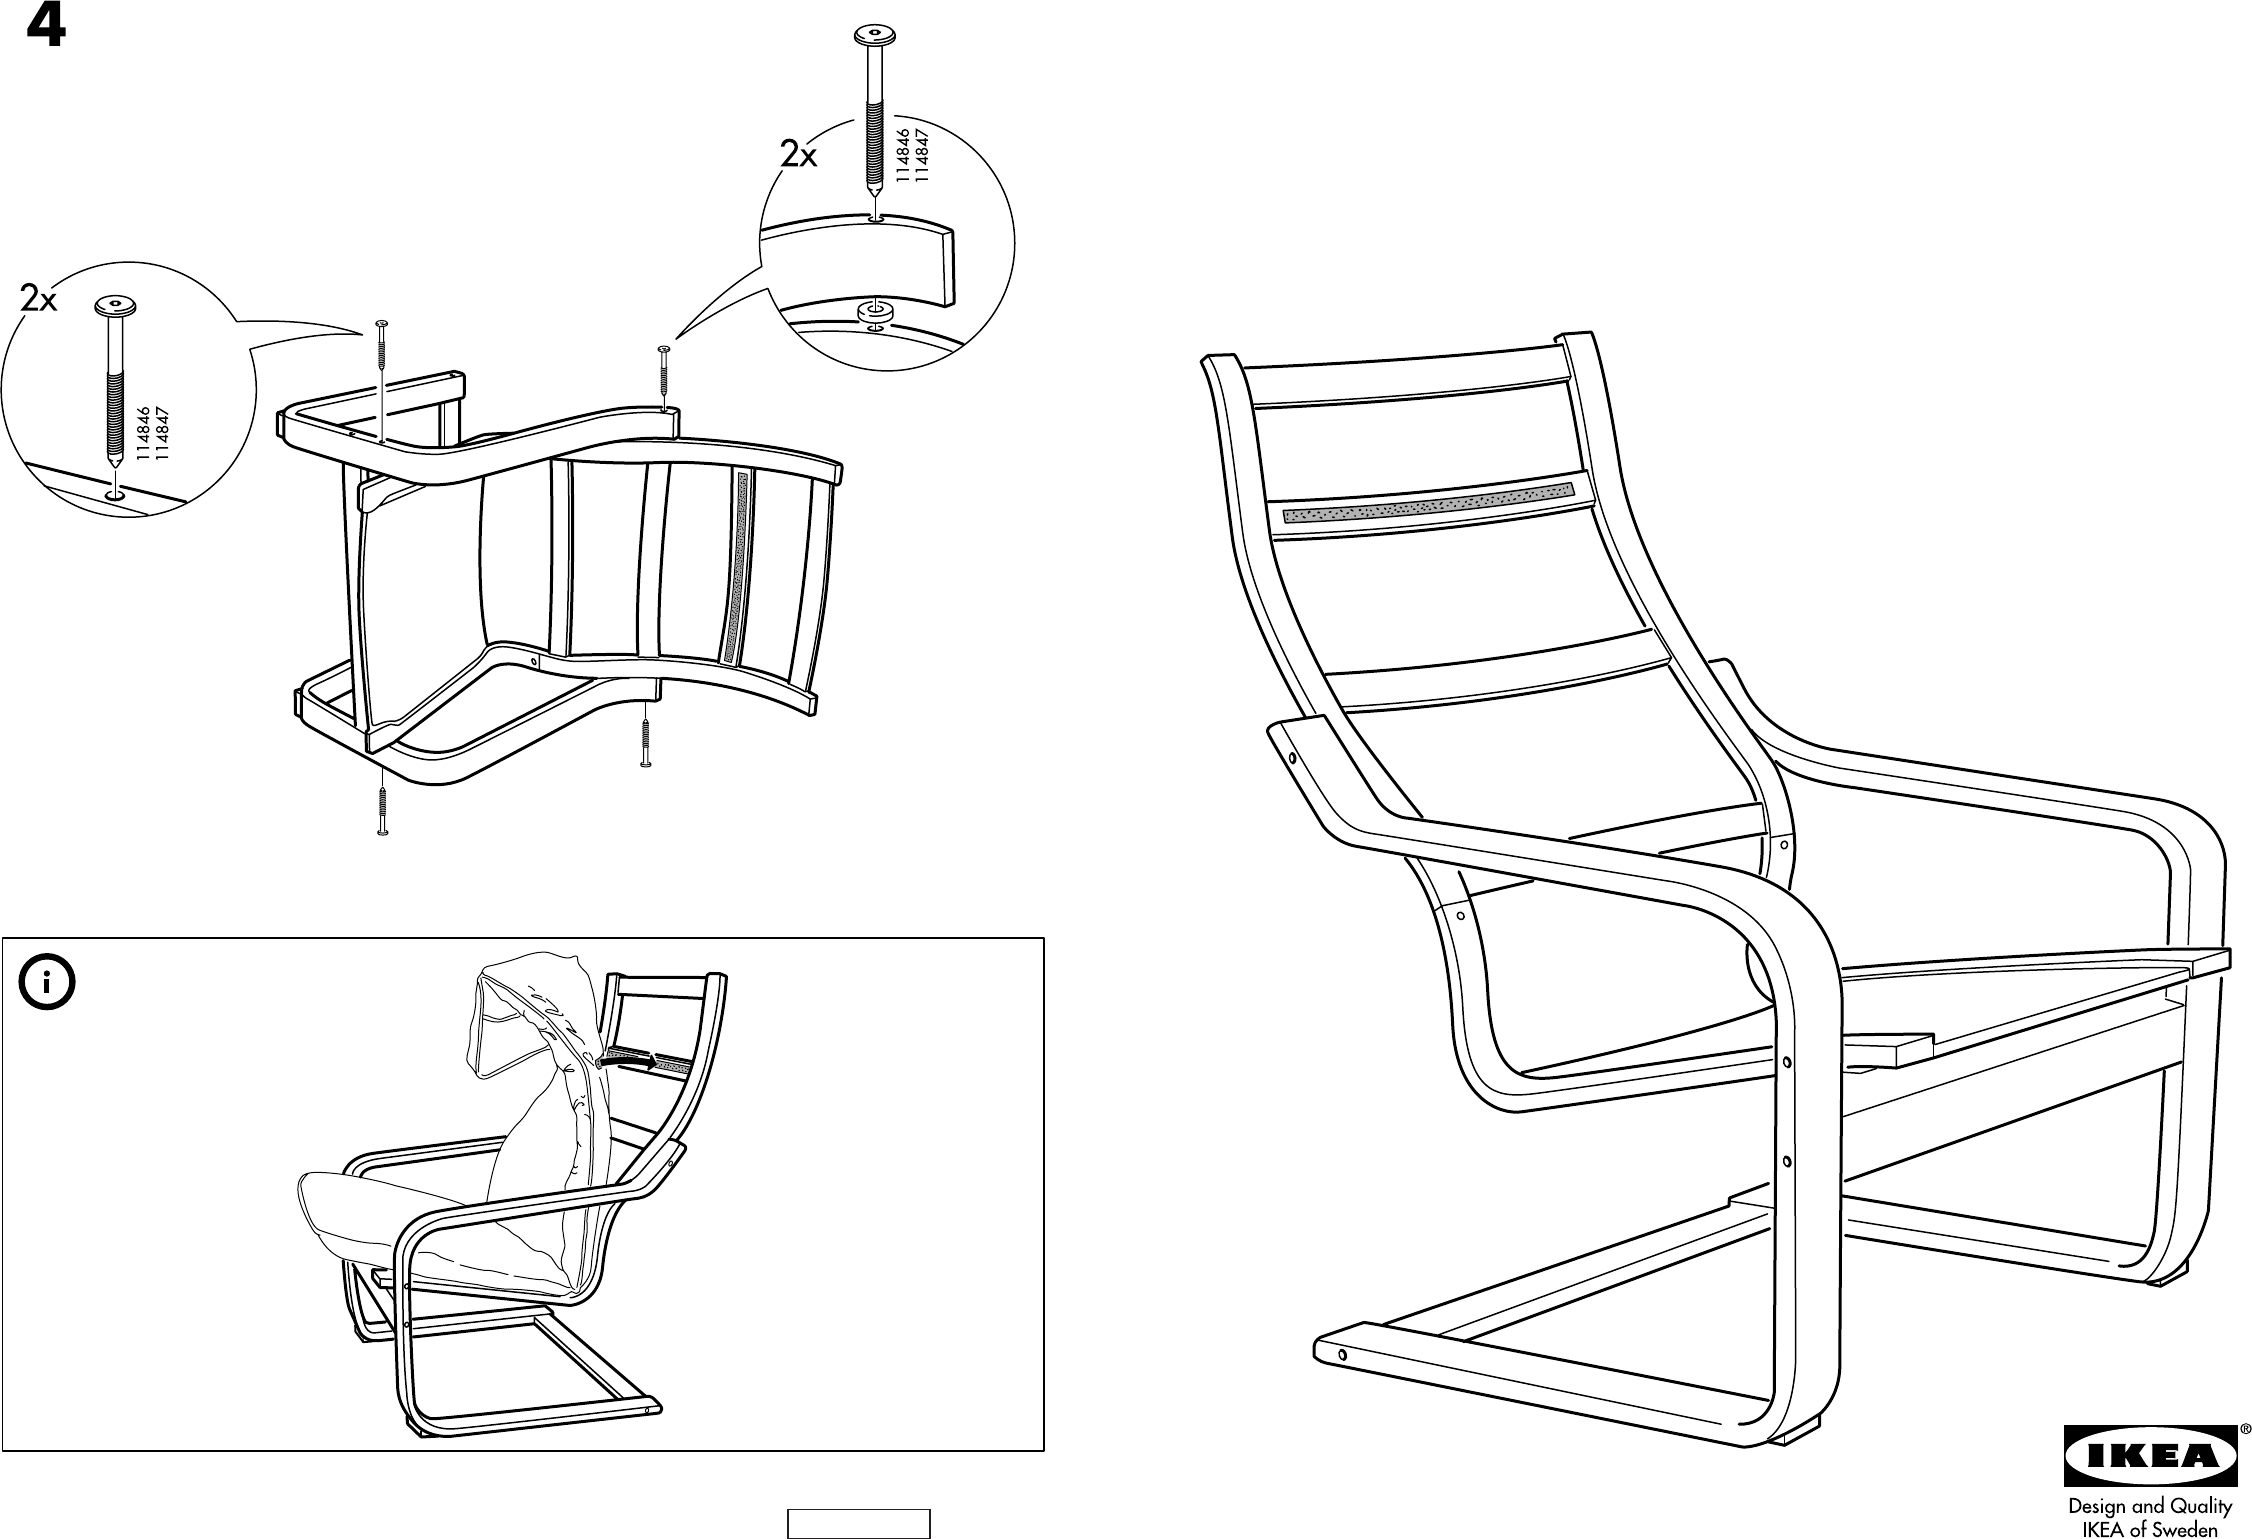 Manual Ikea Poang onderstel stoel (page 1 of 2) (Danish